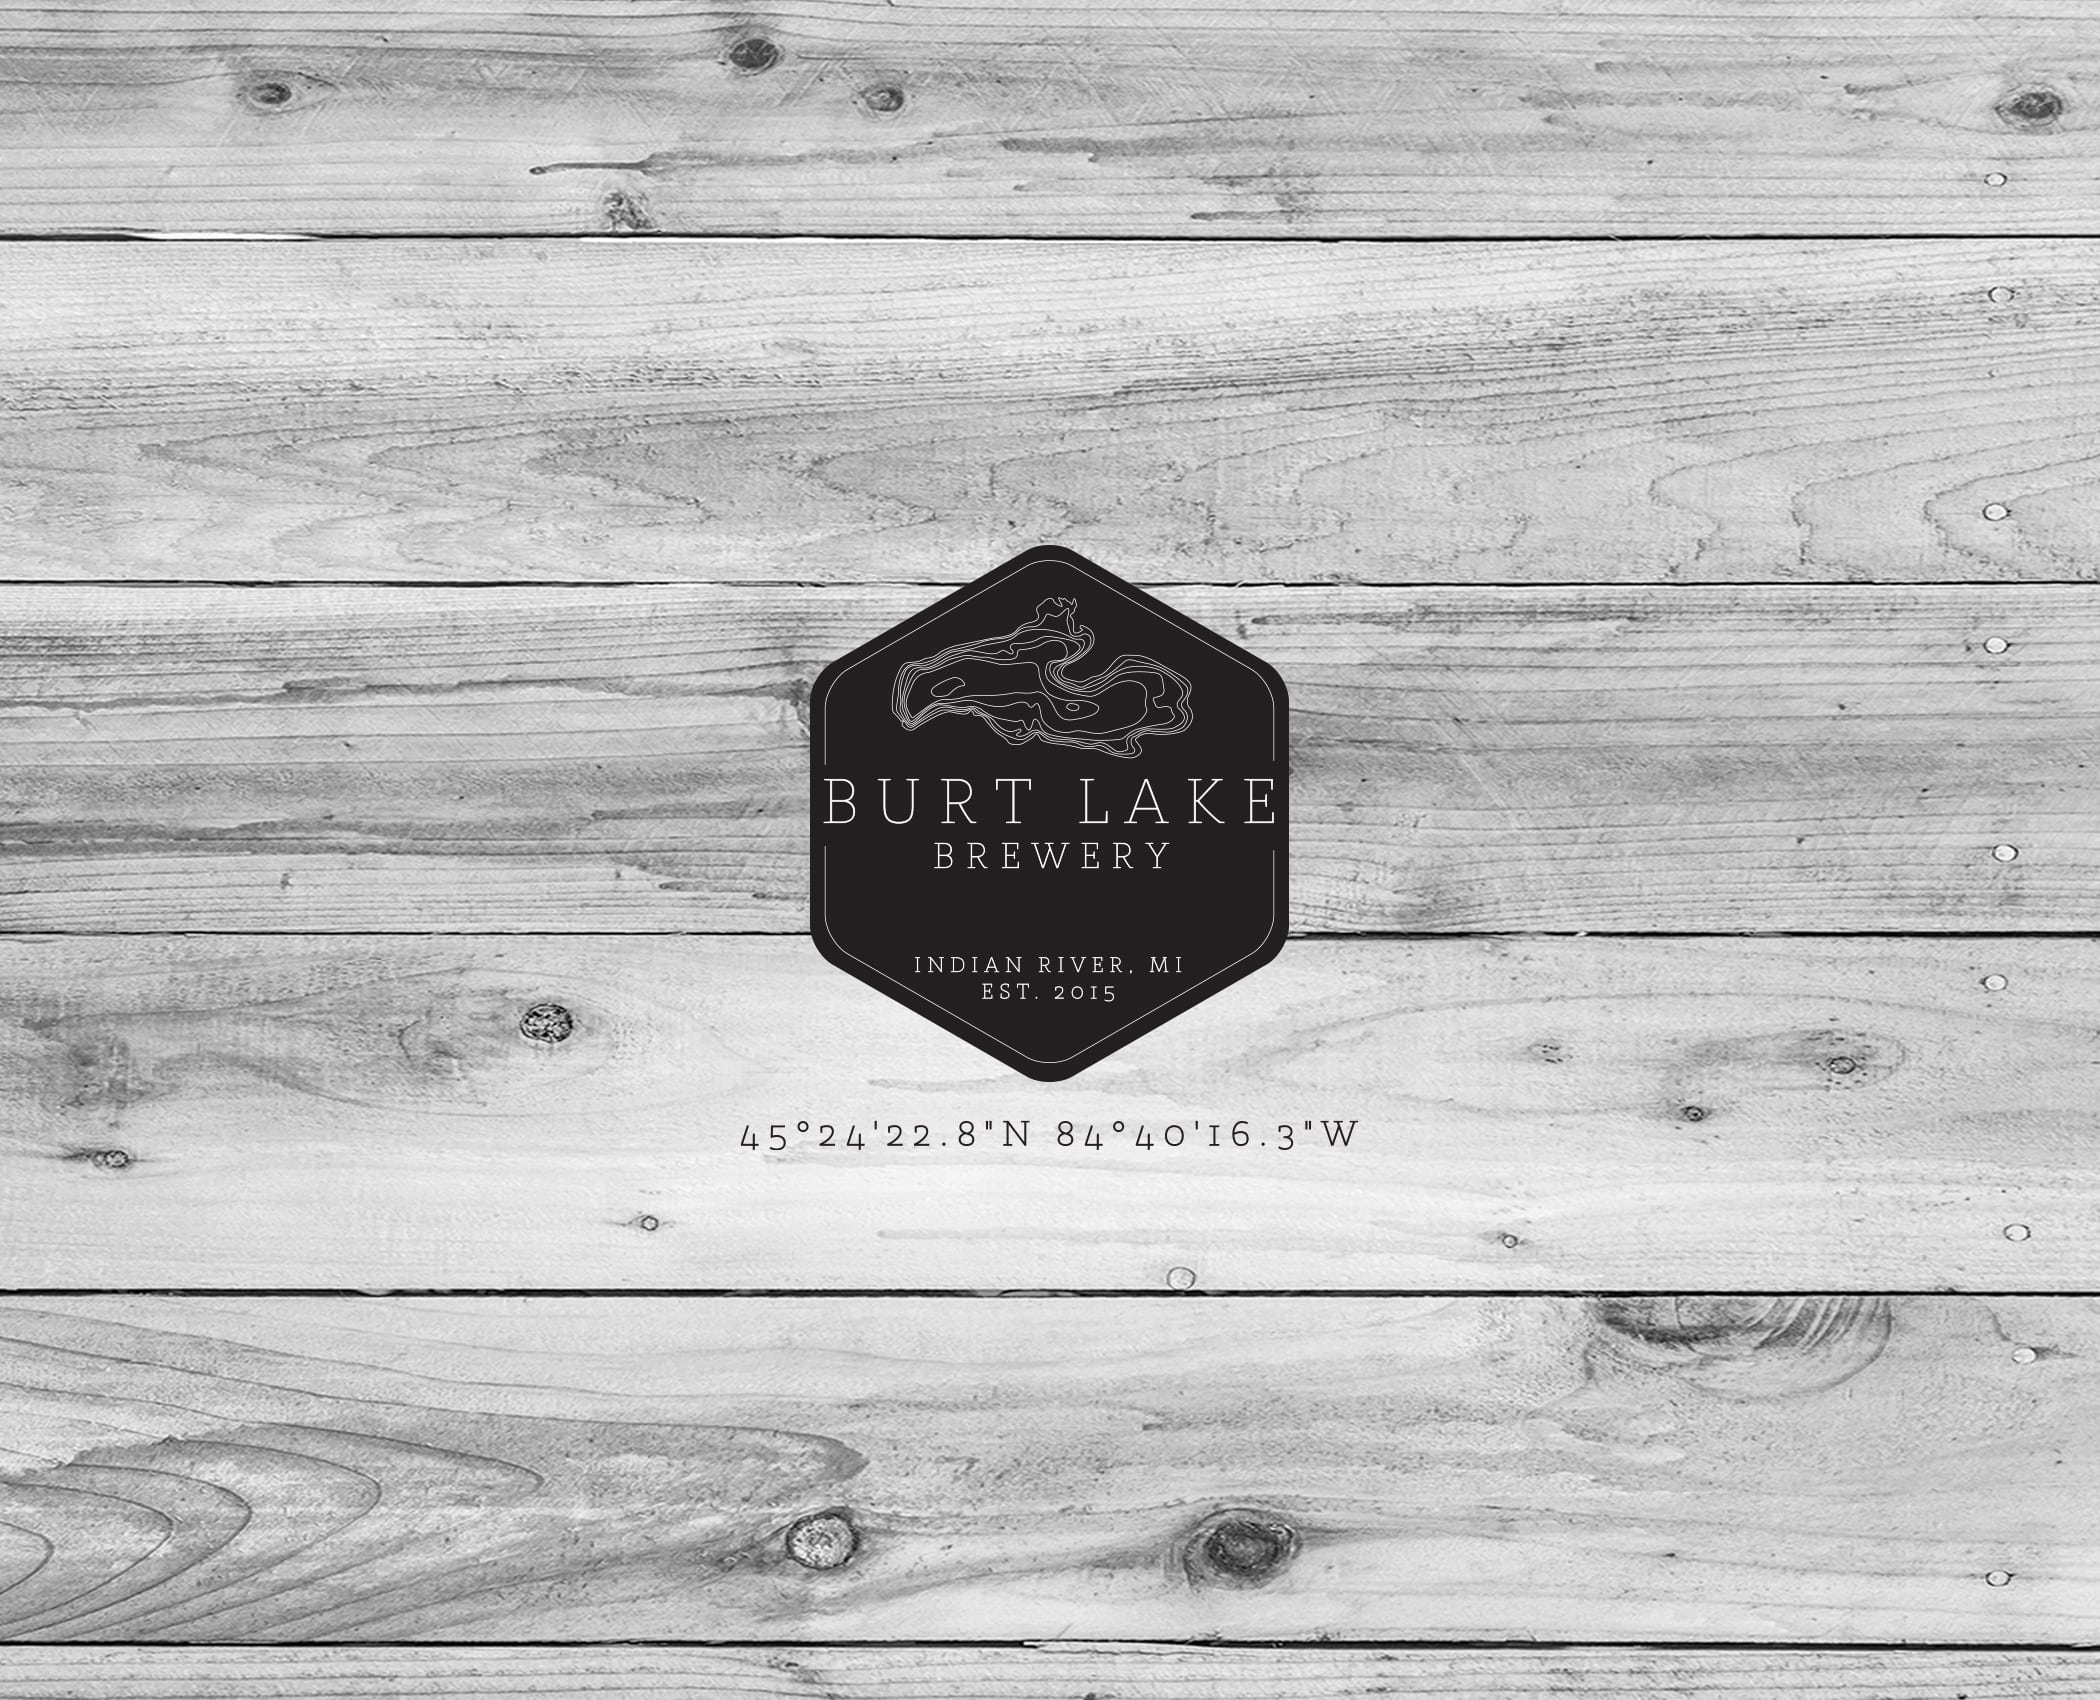 Burt Lake Brewery / Seasons of the North Winery